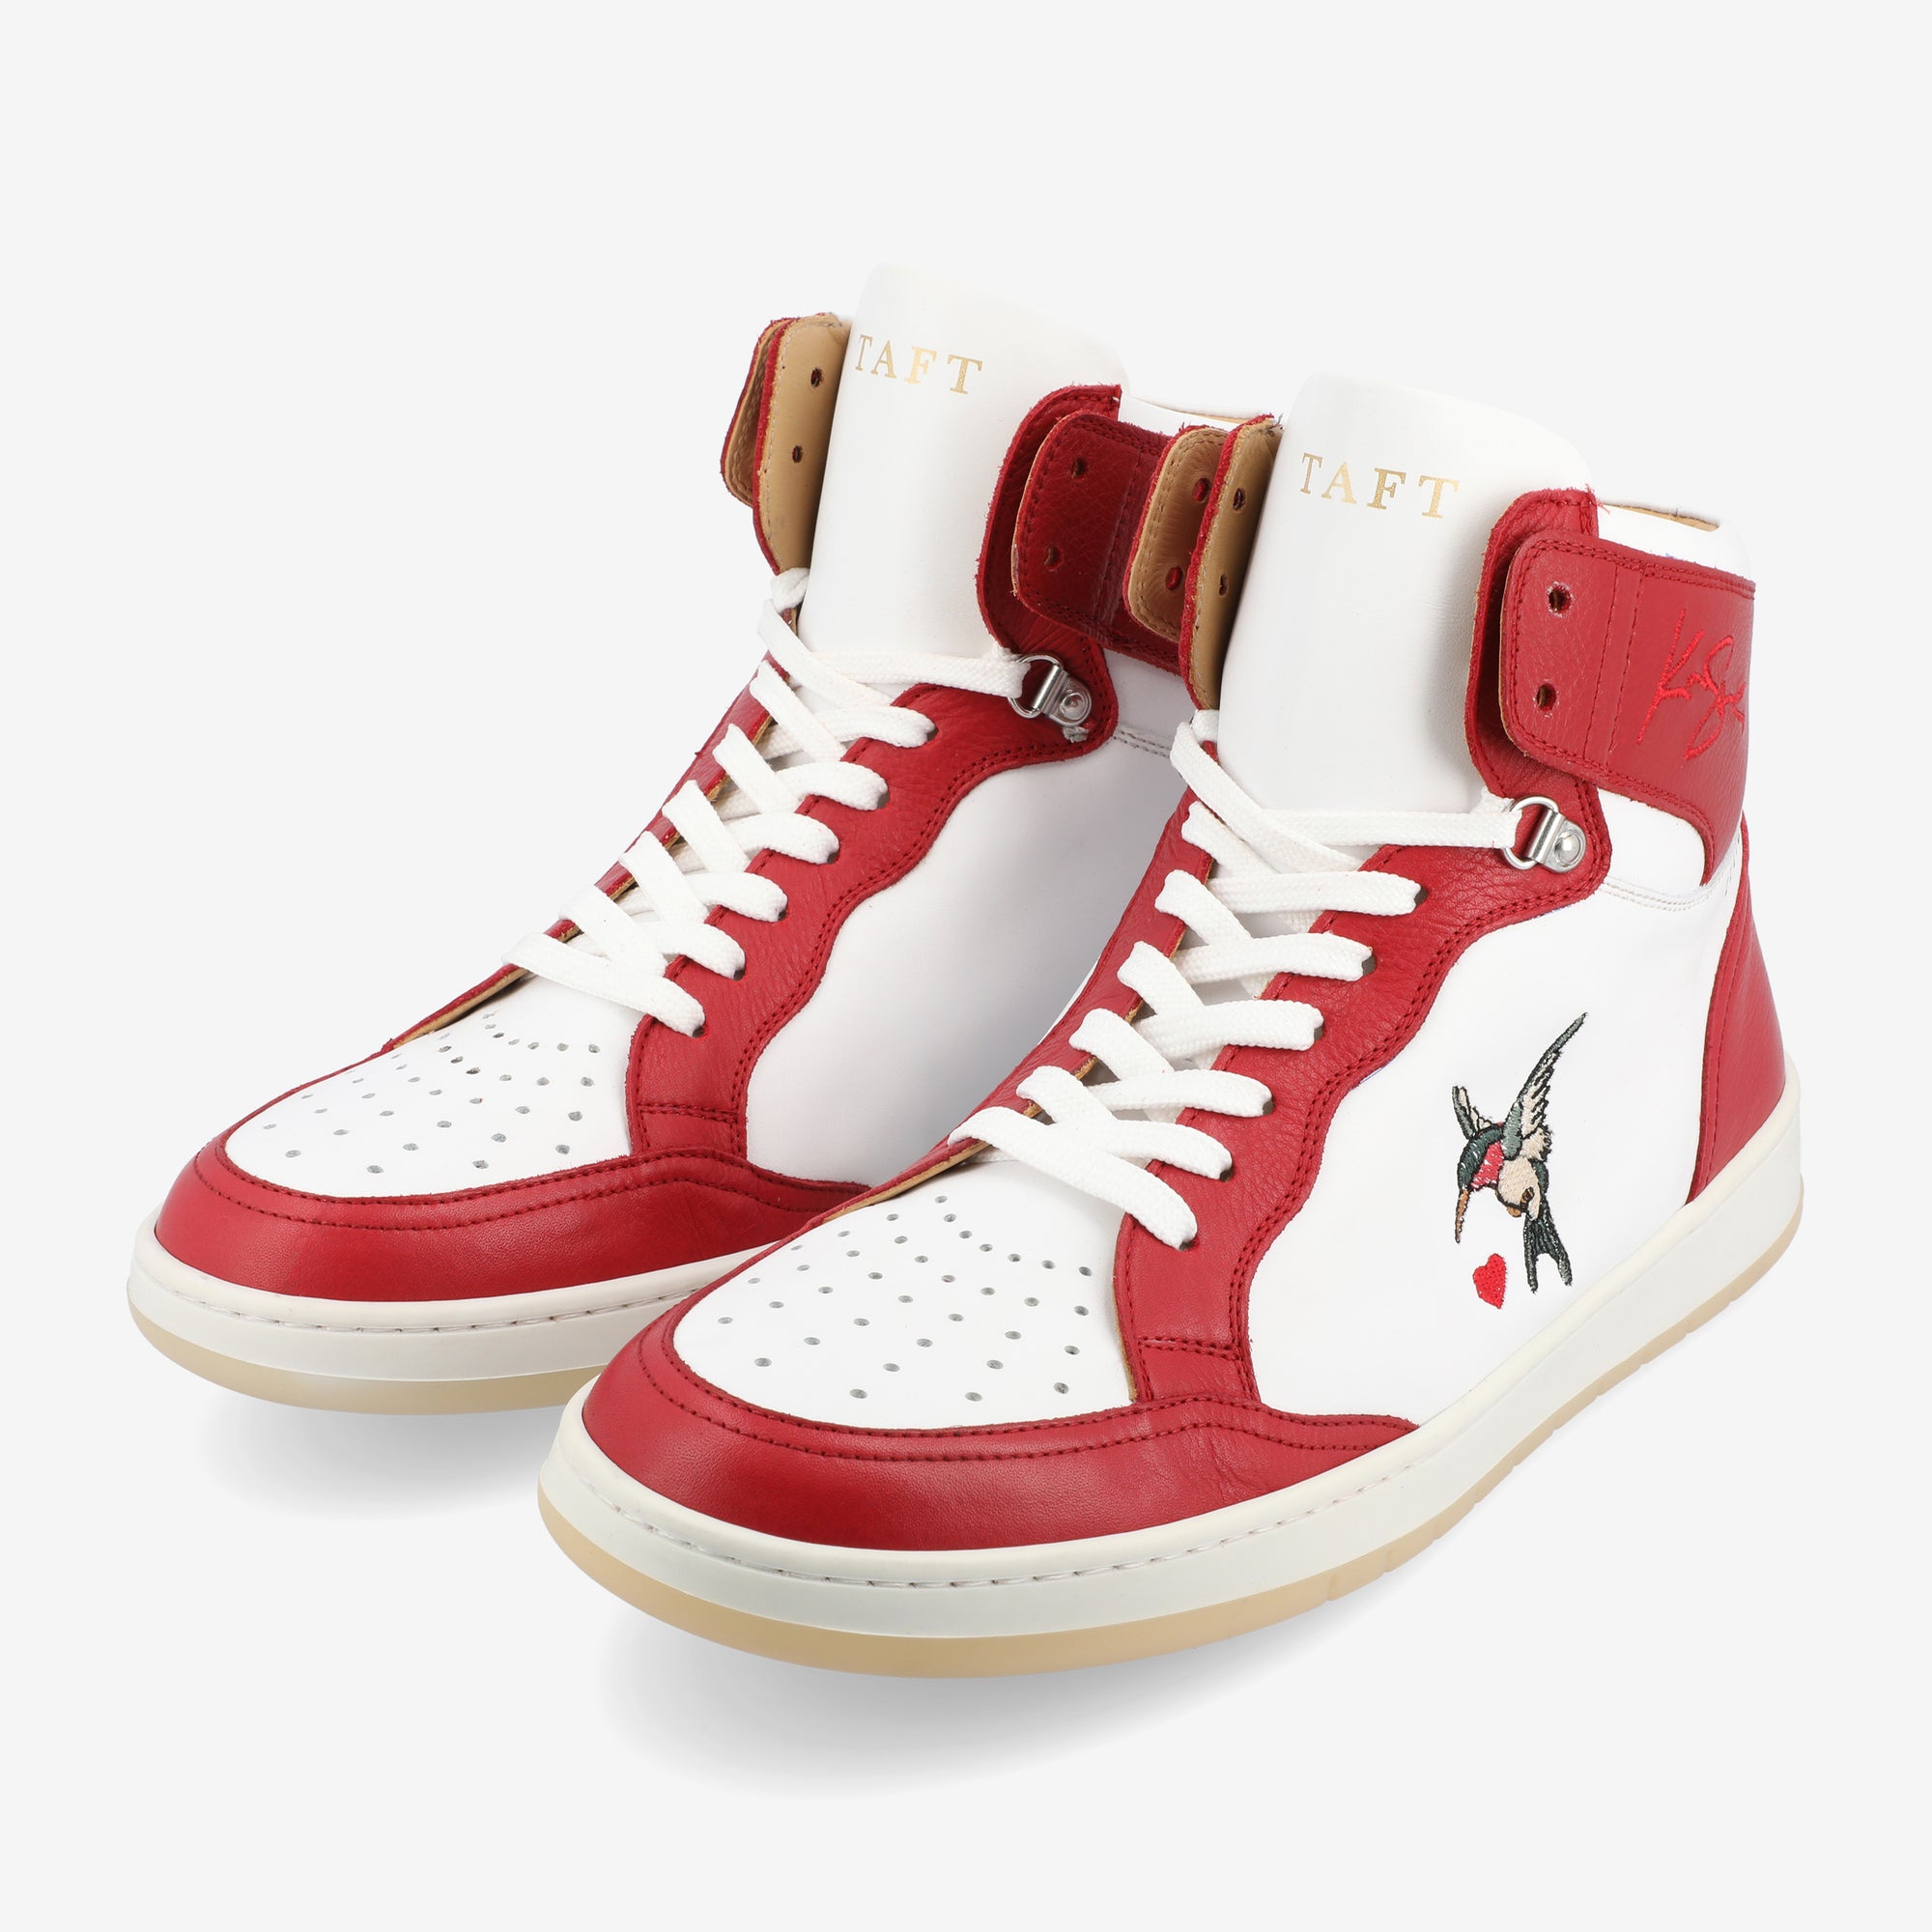 The Rapido High-top Sneaker in Red Hummingbird